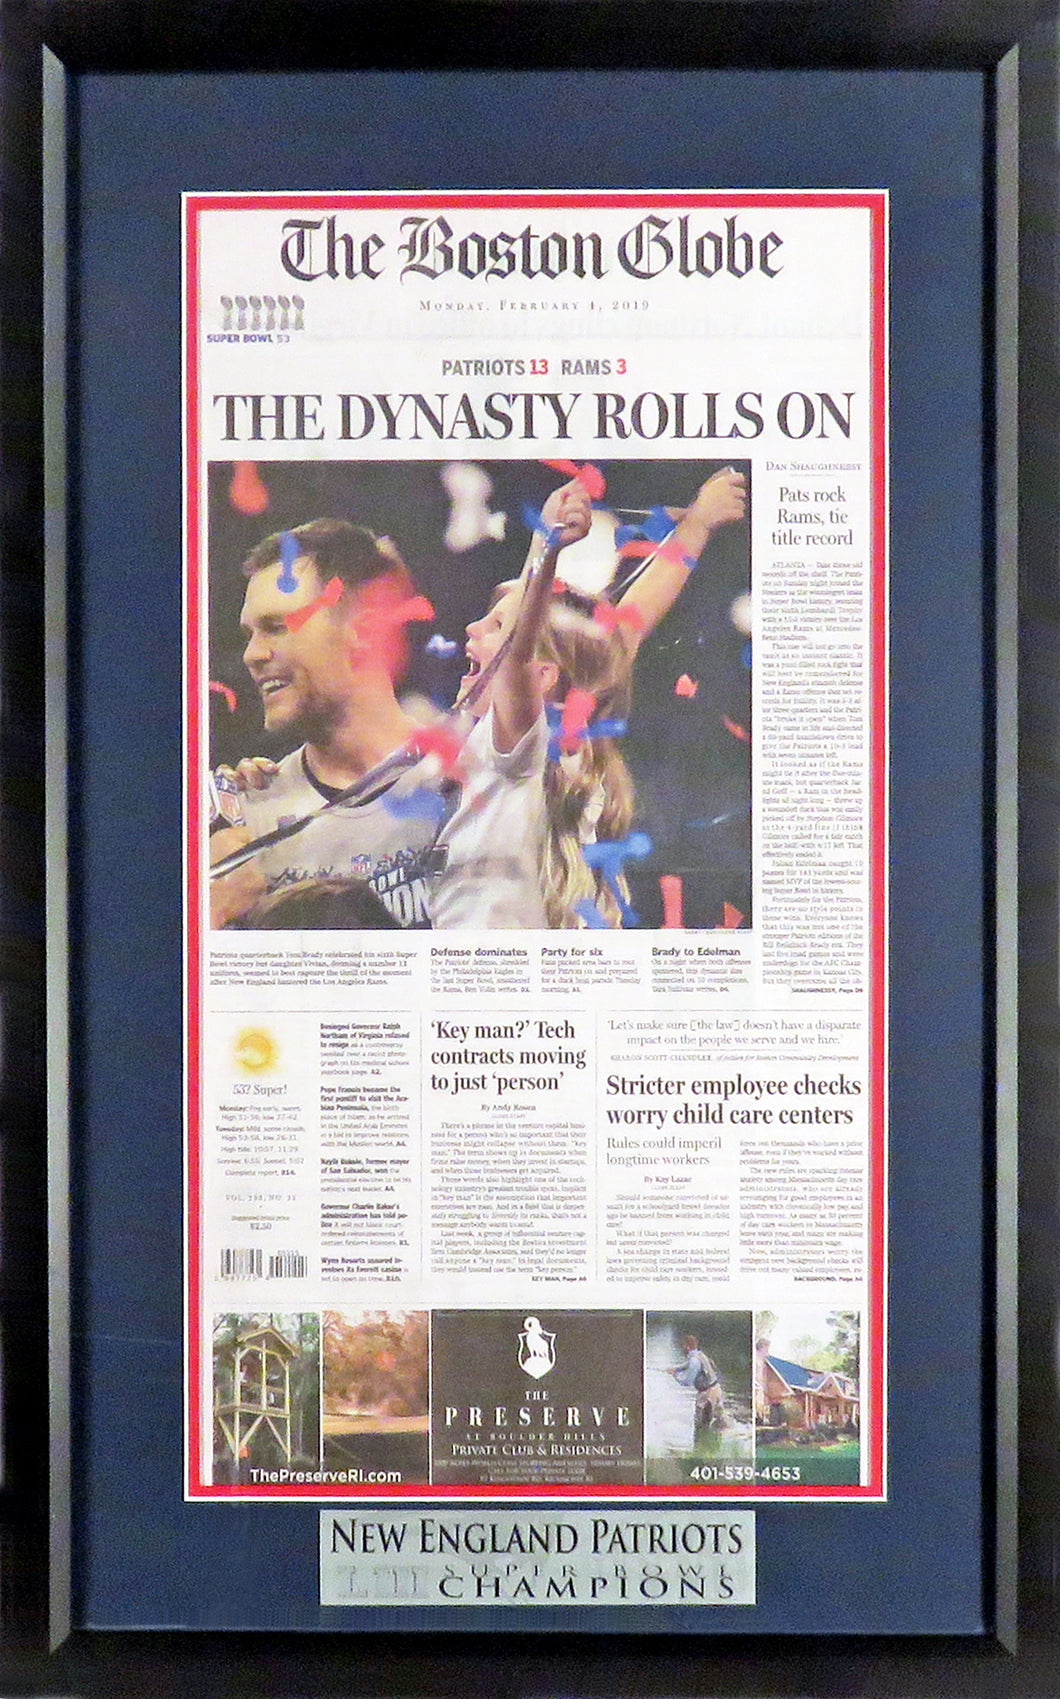 New England Patriots “Super Bowl LI Champions” Boston Herald Framed Newspaper